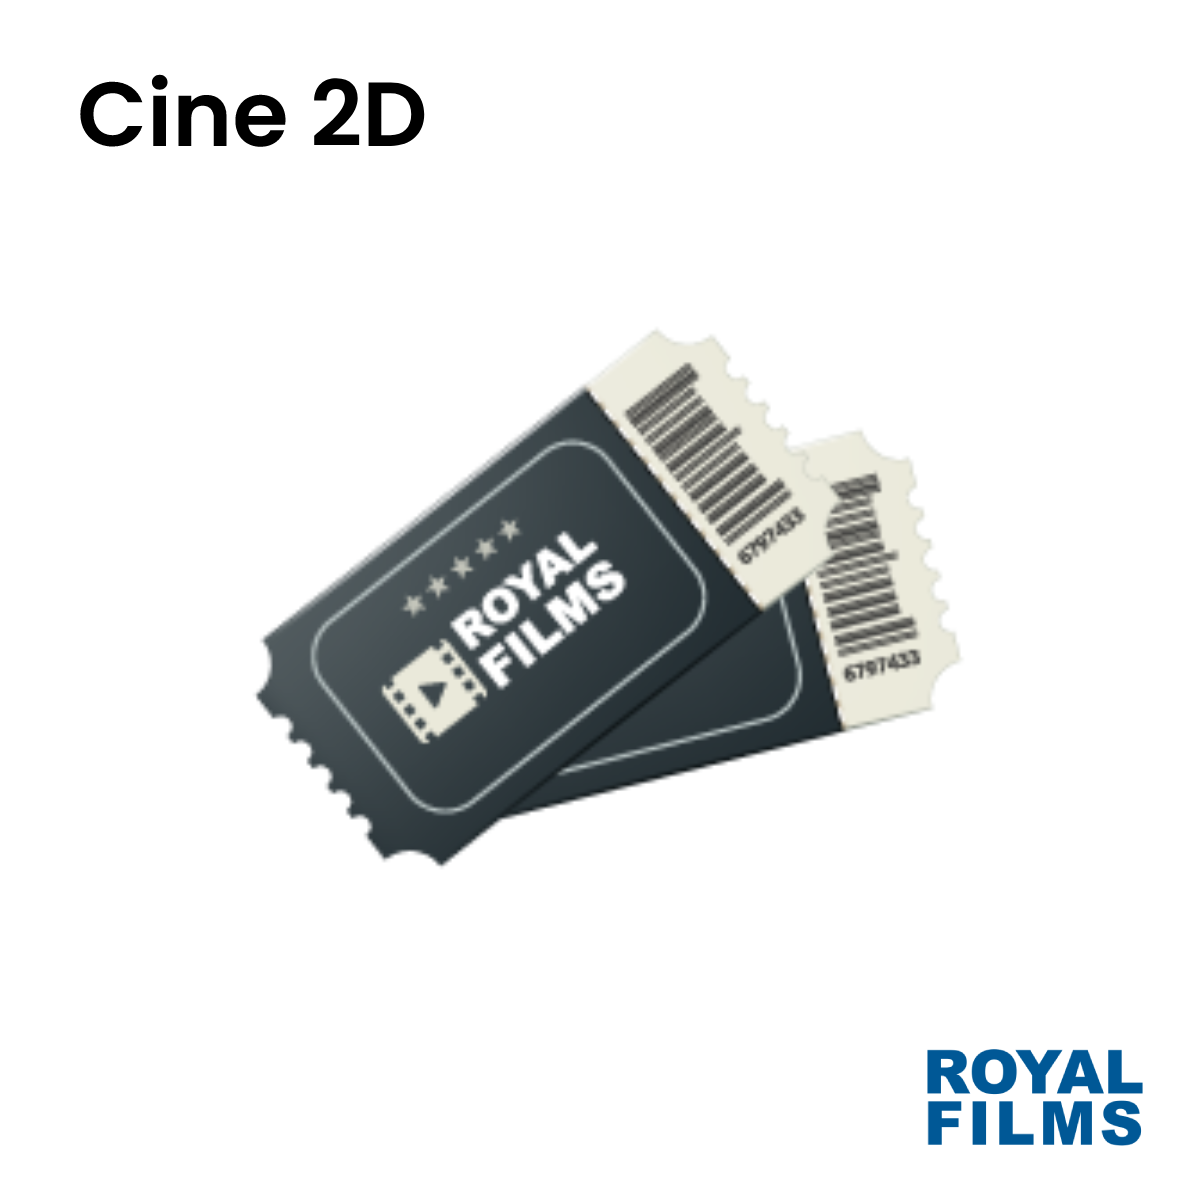 Bonos Cine 2D - Royal Films